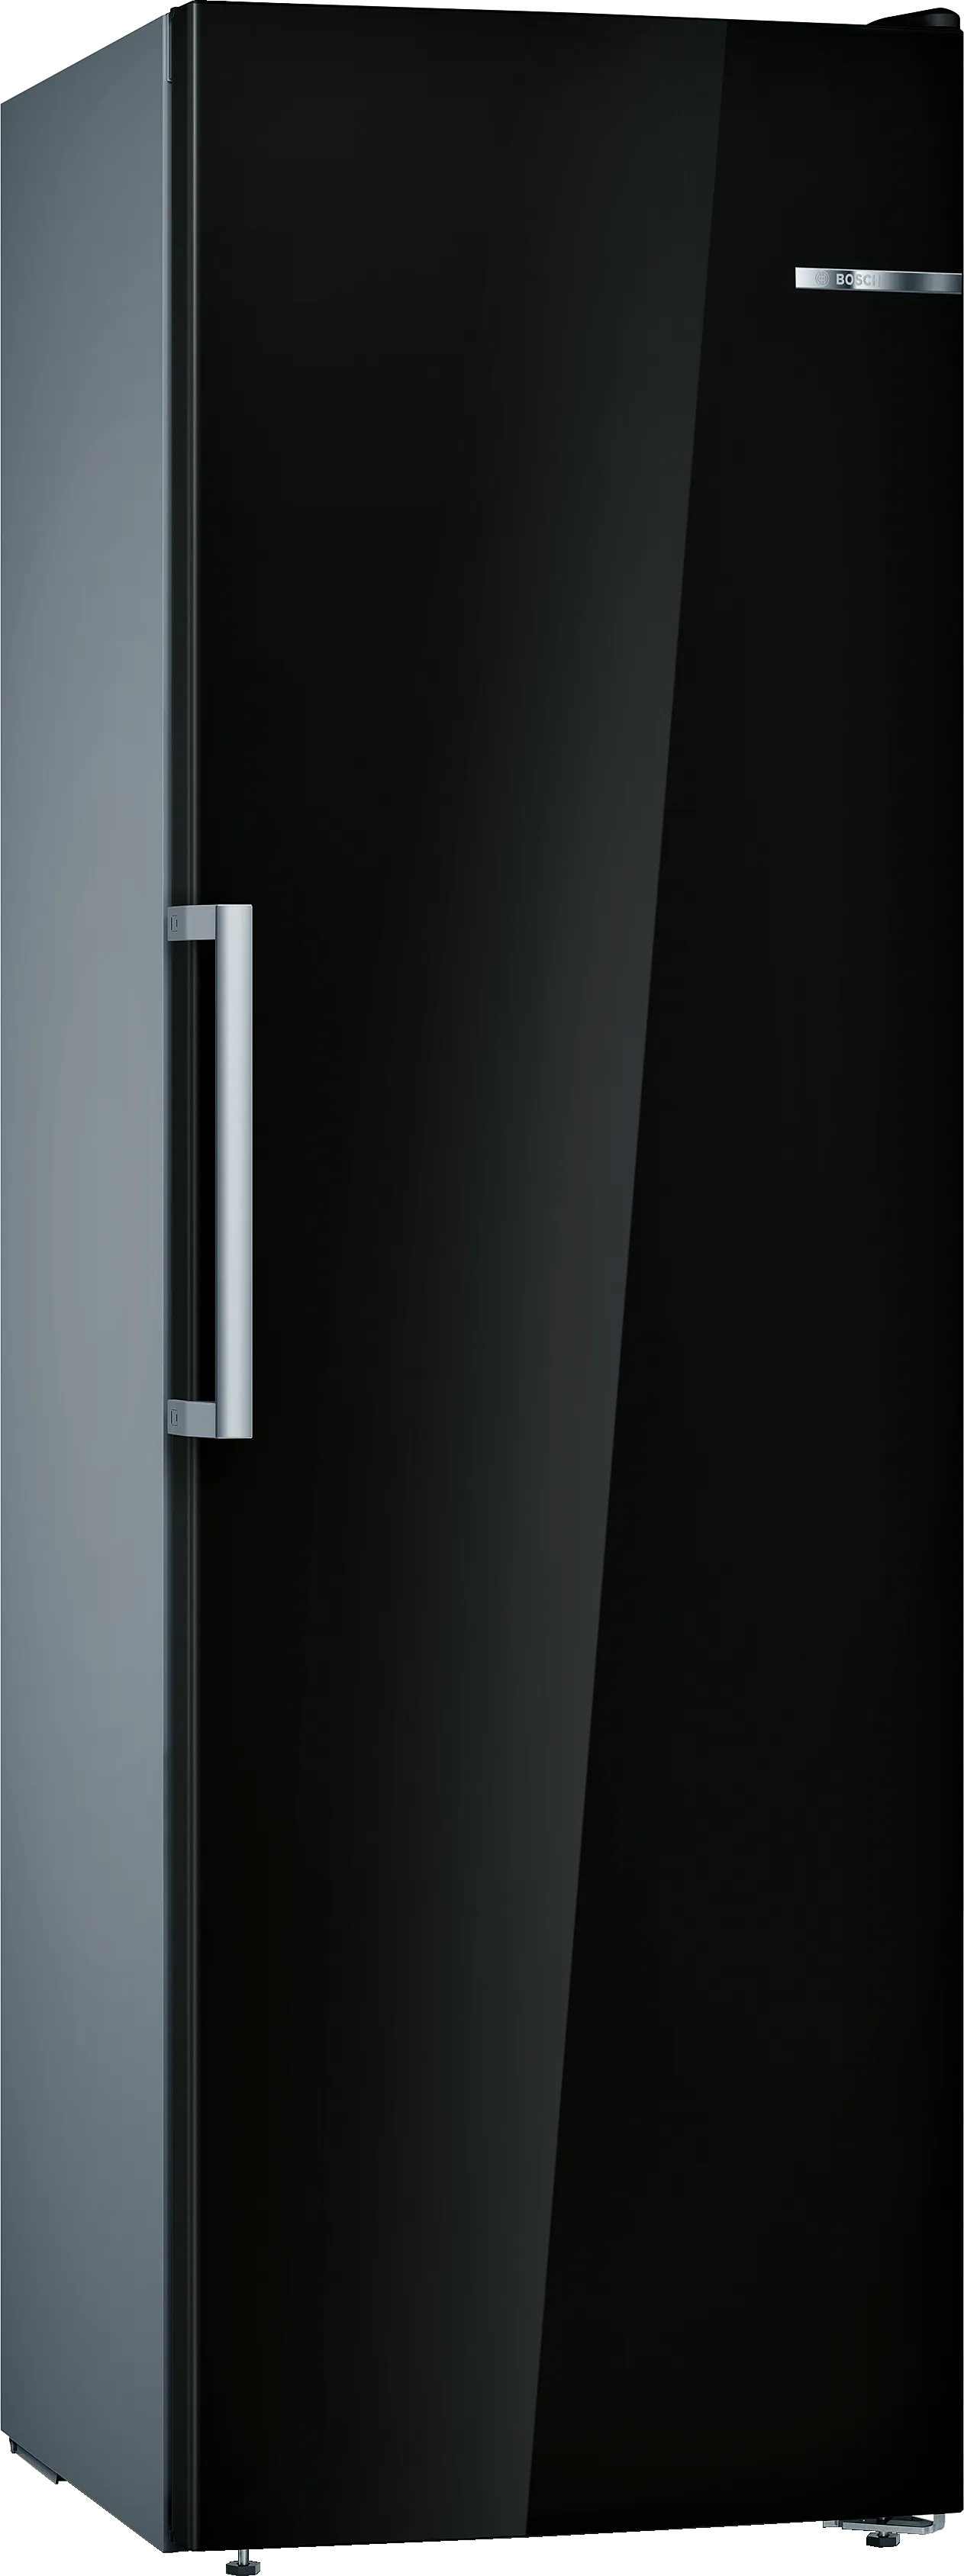 Series 4 free-standing freezer 186 x 60 cm Black 